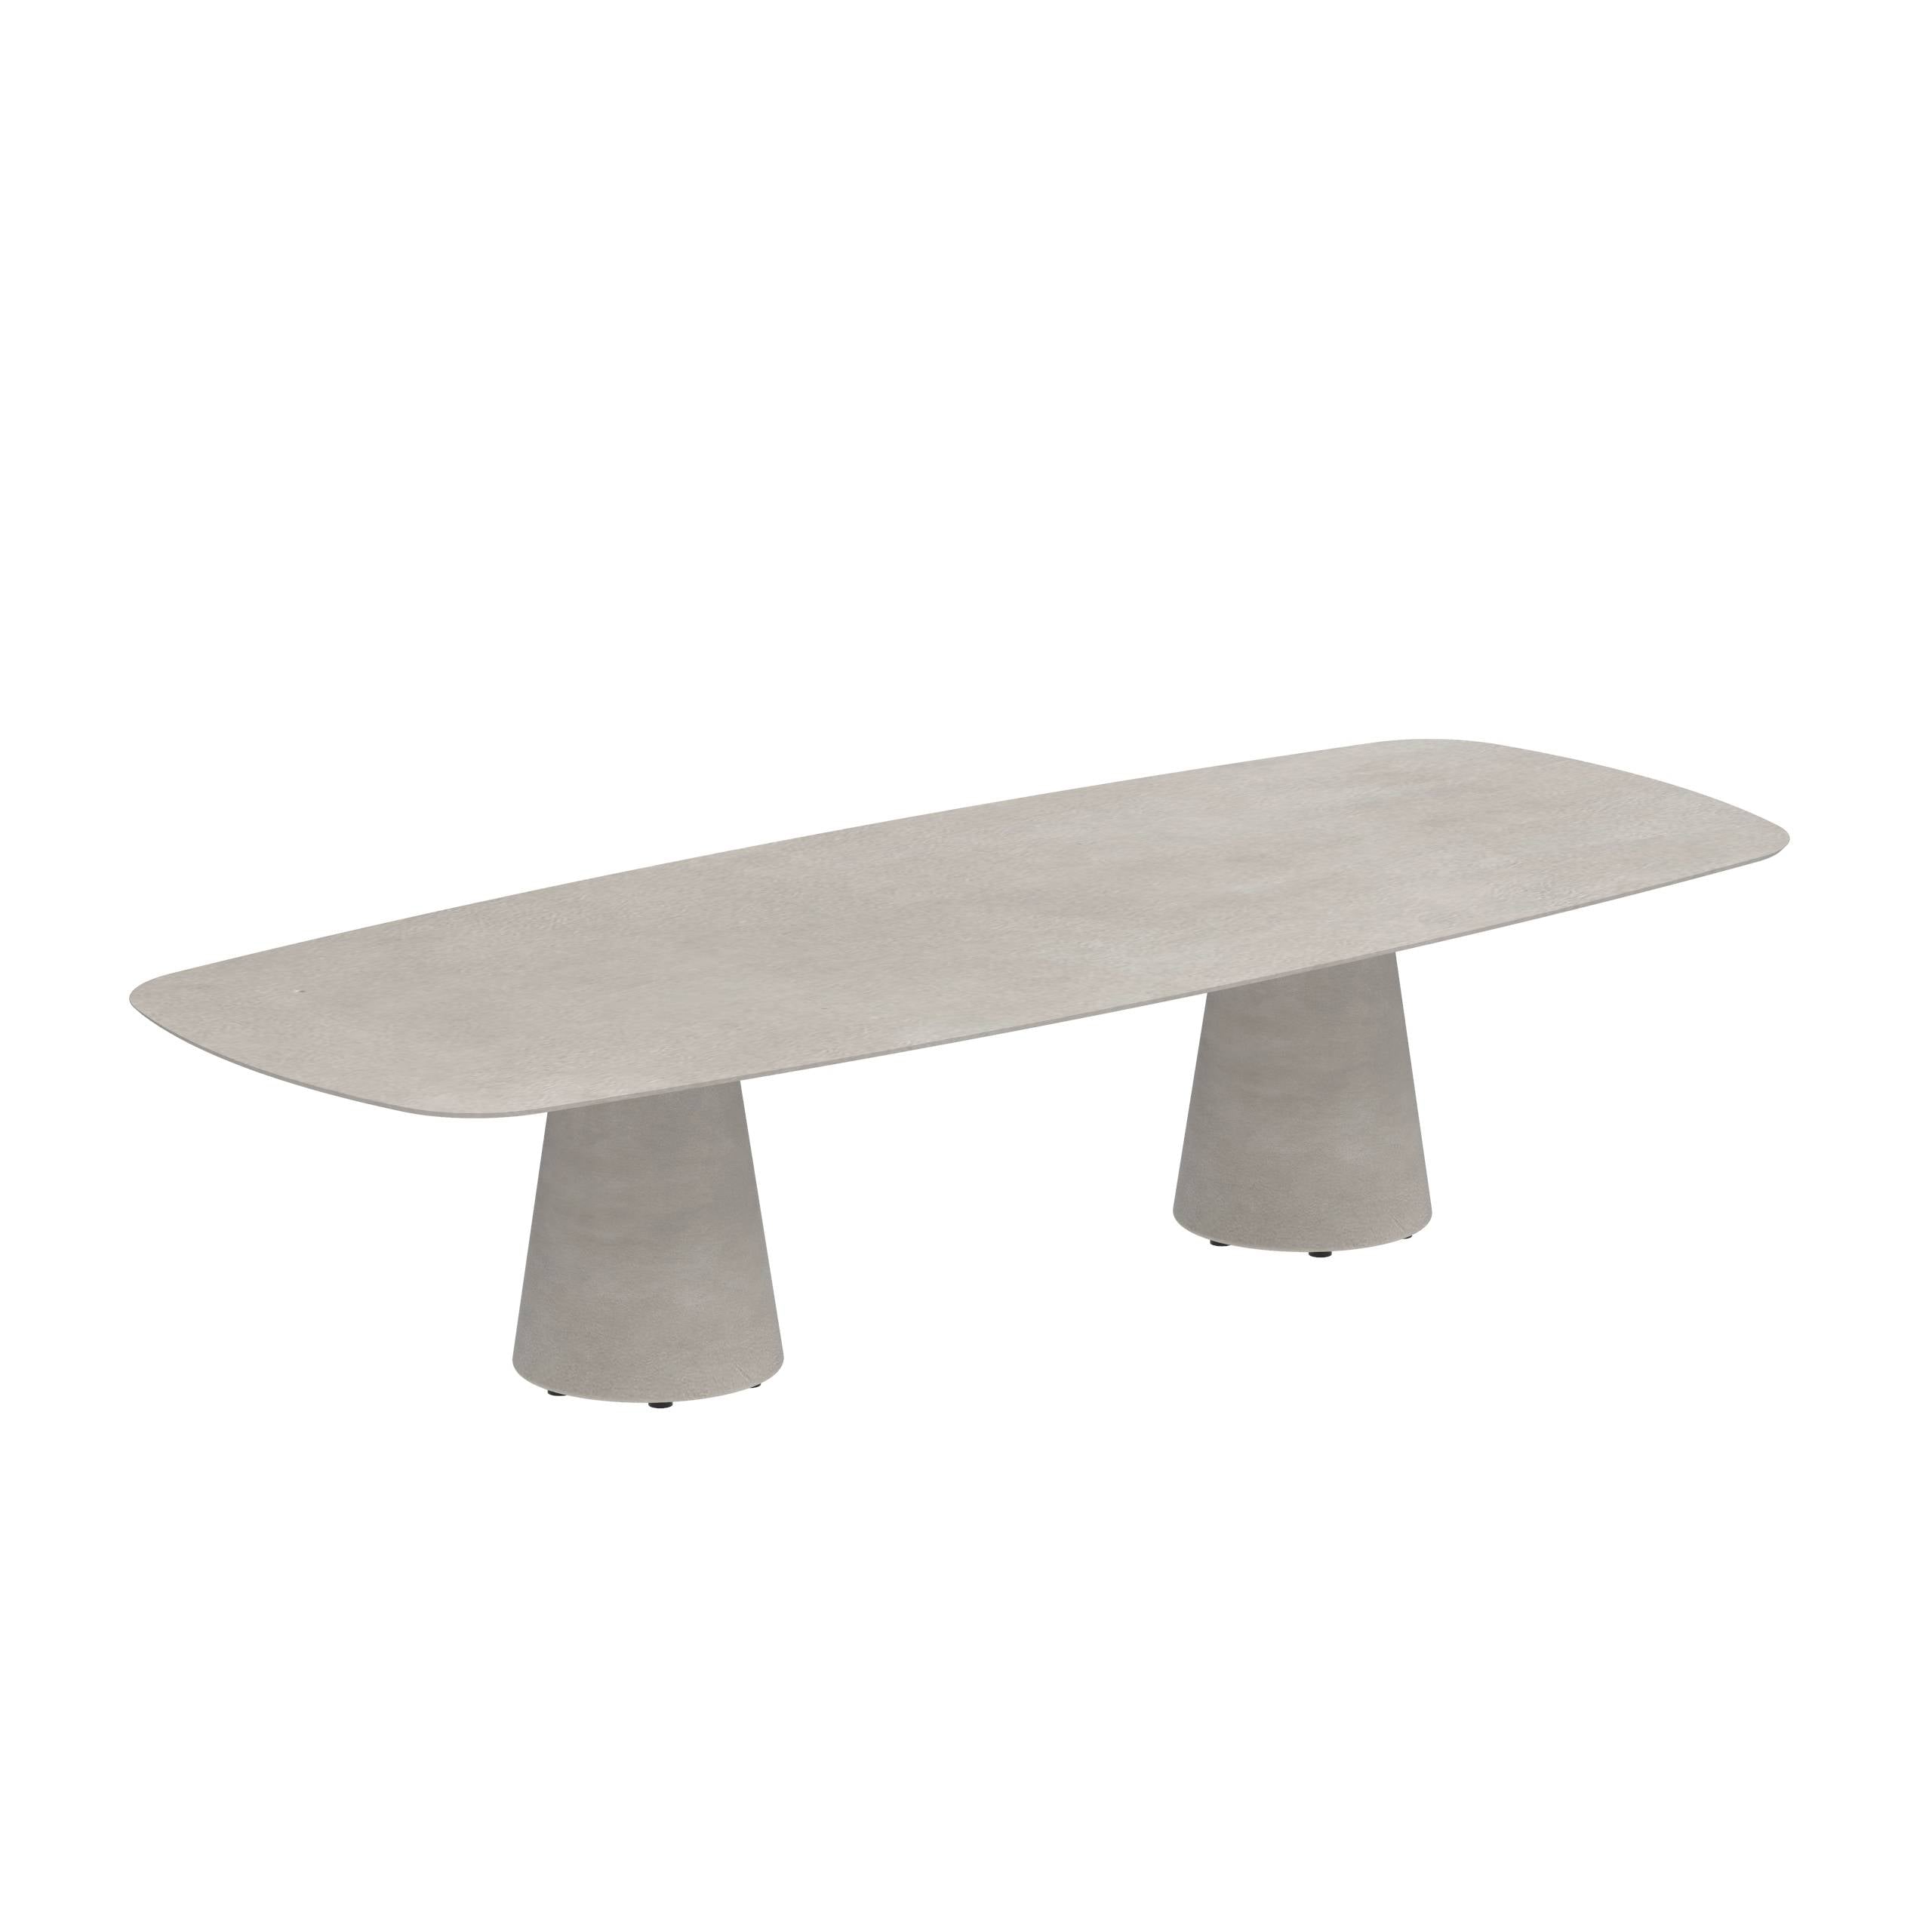 Conix Table 300x120 Cm Low Dining Legs Concrete Cement Grey - Table Top Ceramic Cemento Luminoso